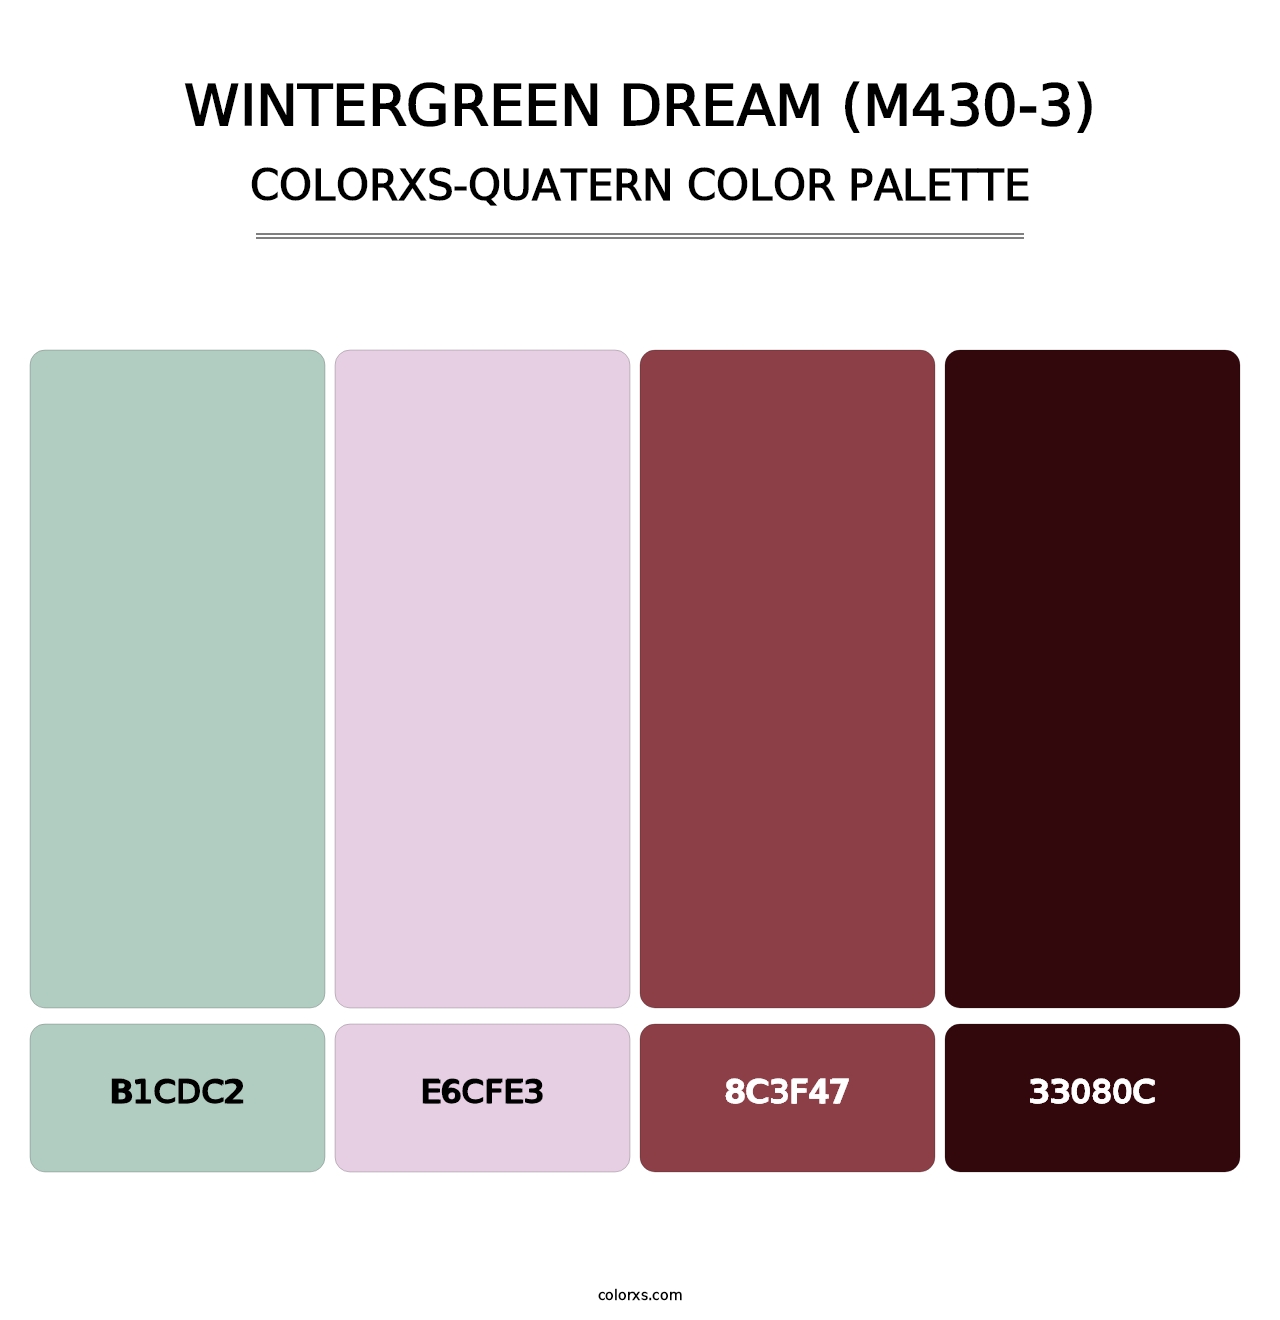 Wintergreen Dream (M430-3) - Colorxs Quatern Palette